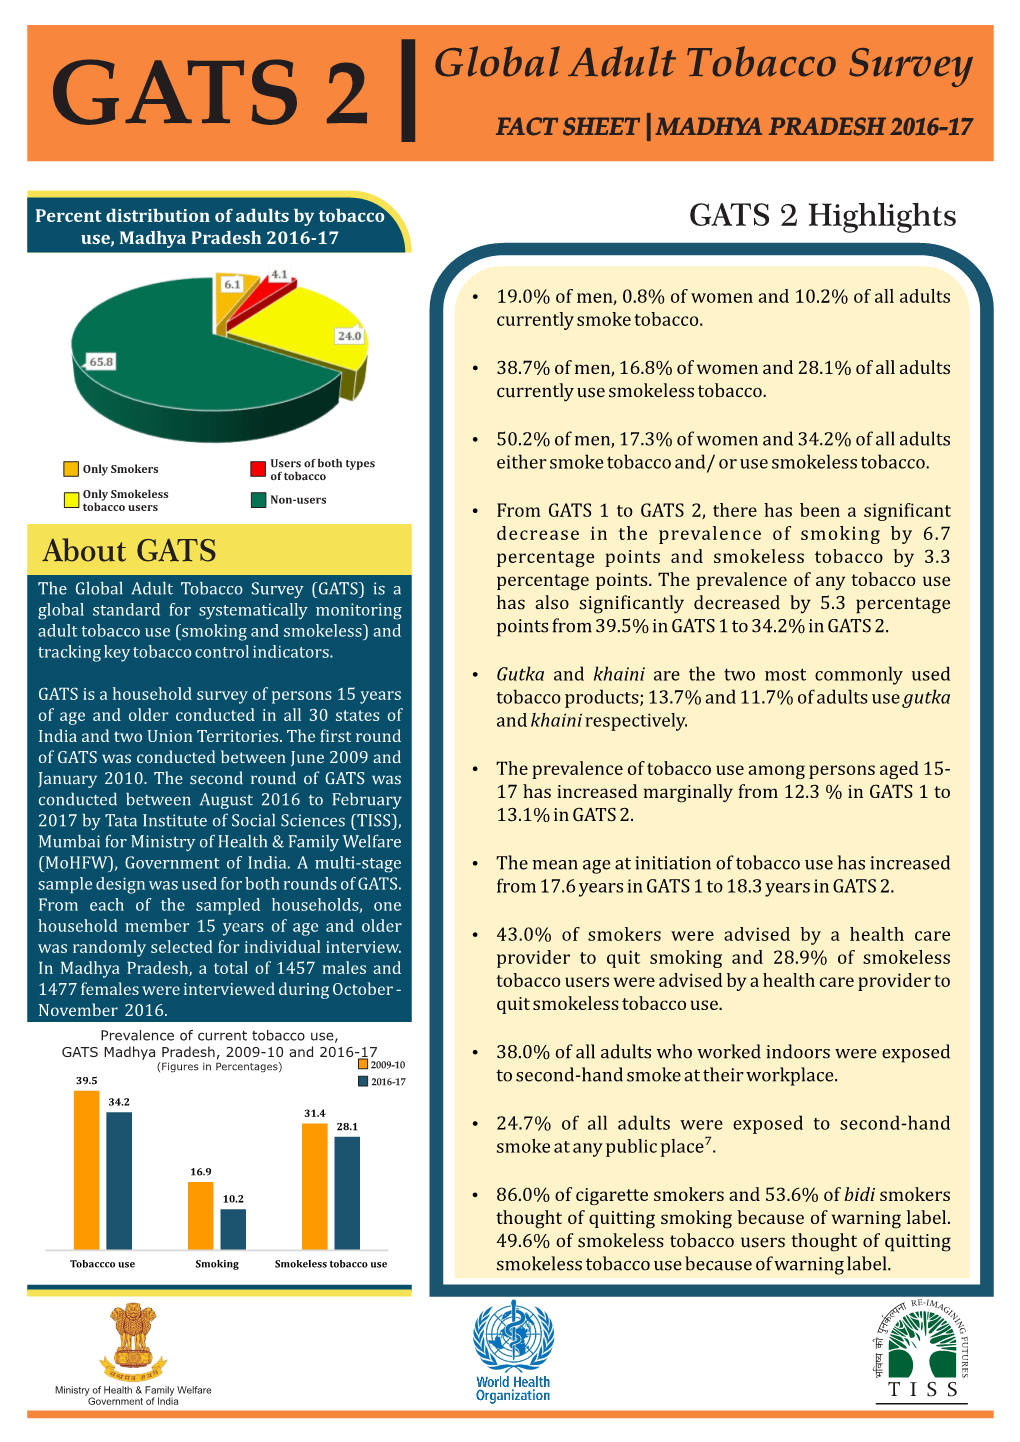 Gats 2 Fact Sheet | Madhya Pradesh 2016-17